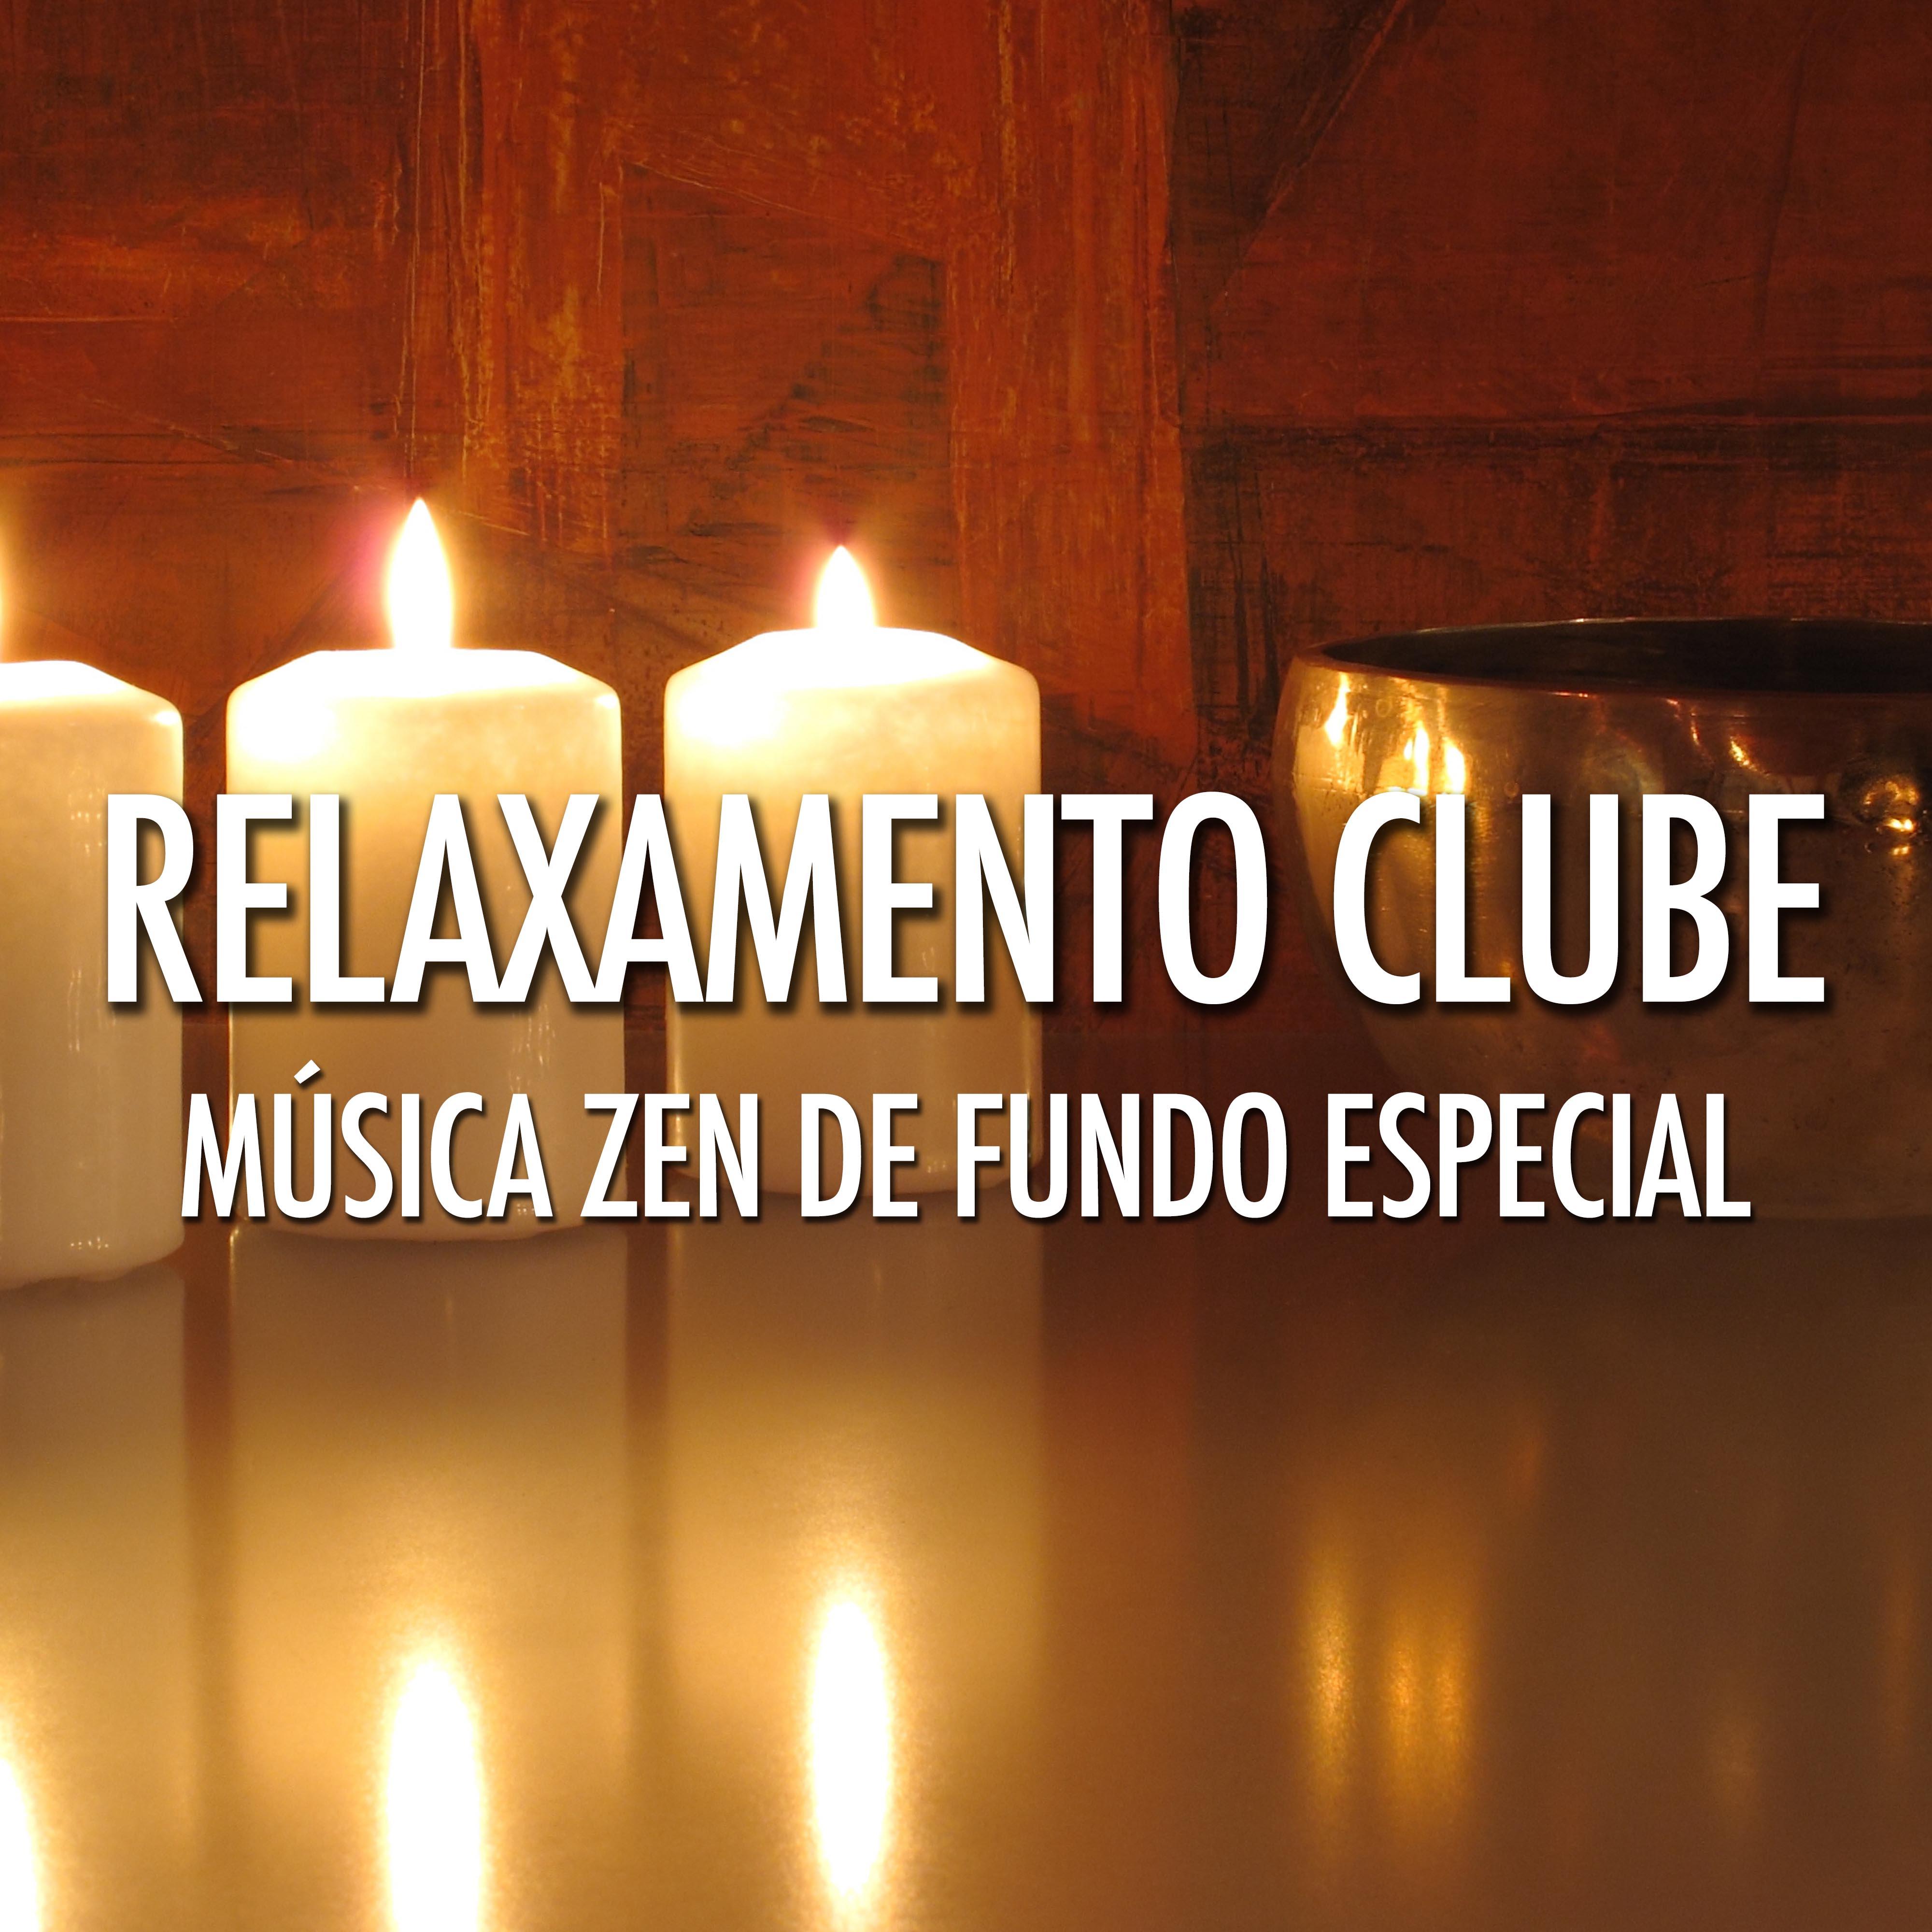 Relaxamento Clube  Mu sica Zen de Fundo Especial para Restaurantes, Spa e Clubes, para Relaxamento e conseguir uma Sensa o de Paz, Tranquilidade e Calma